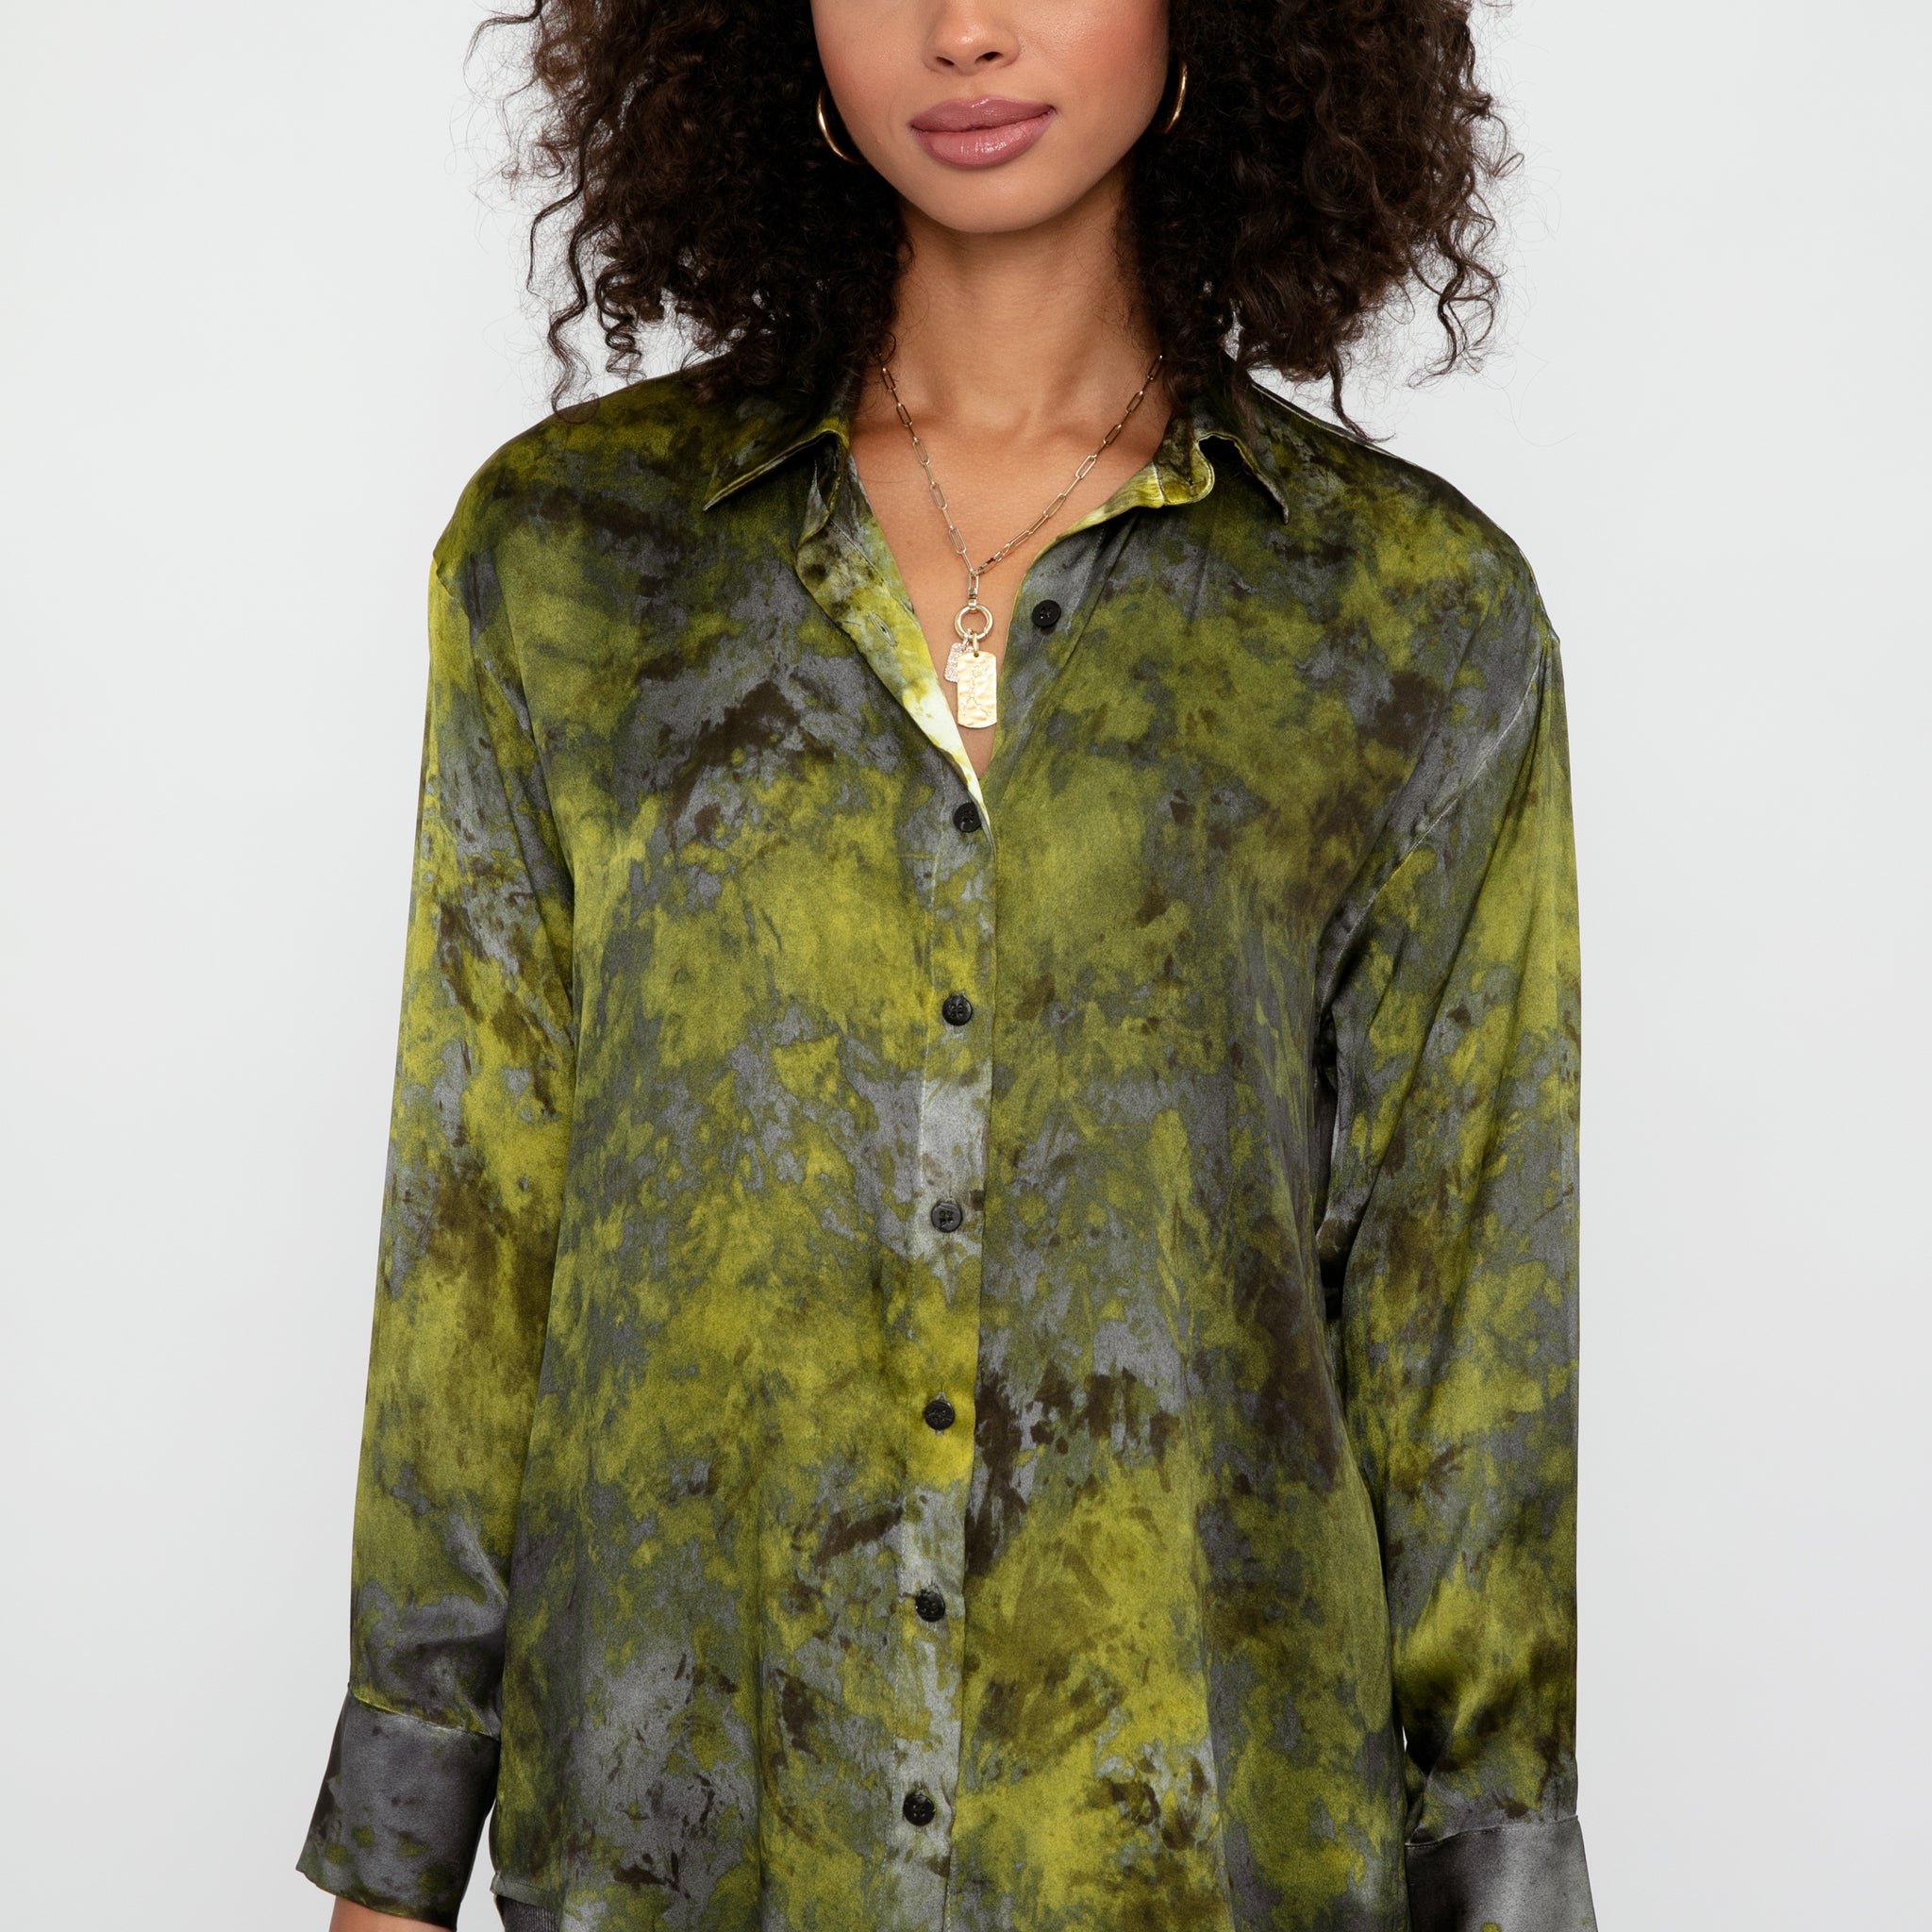 AVANT TOI Boreal Silk Shirt in Lichen